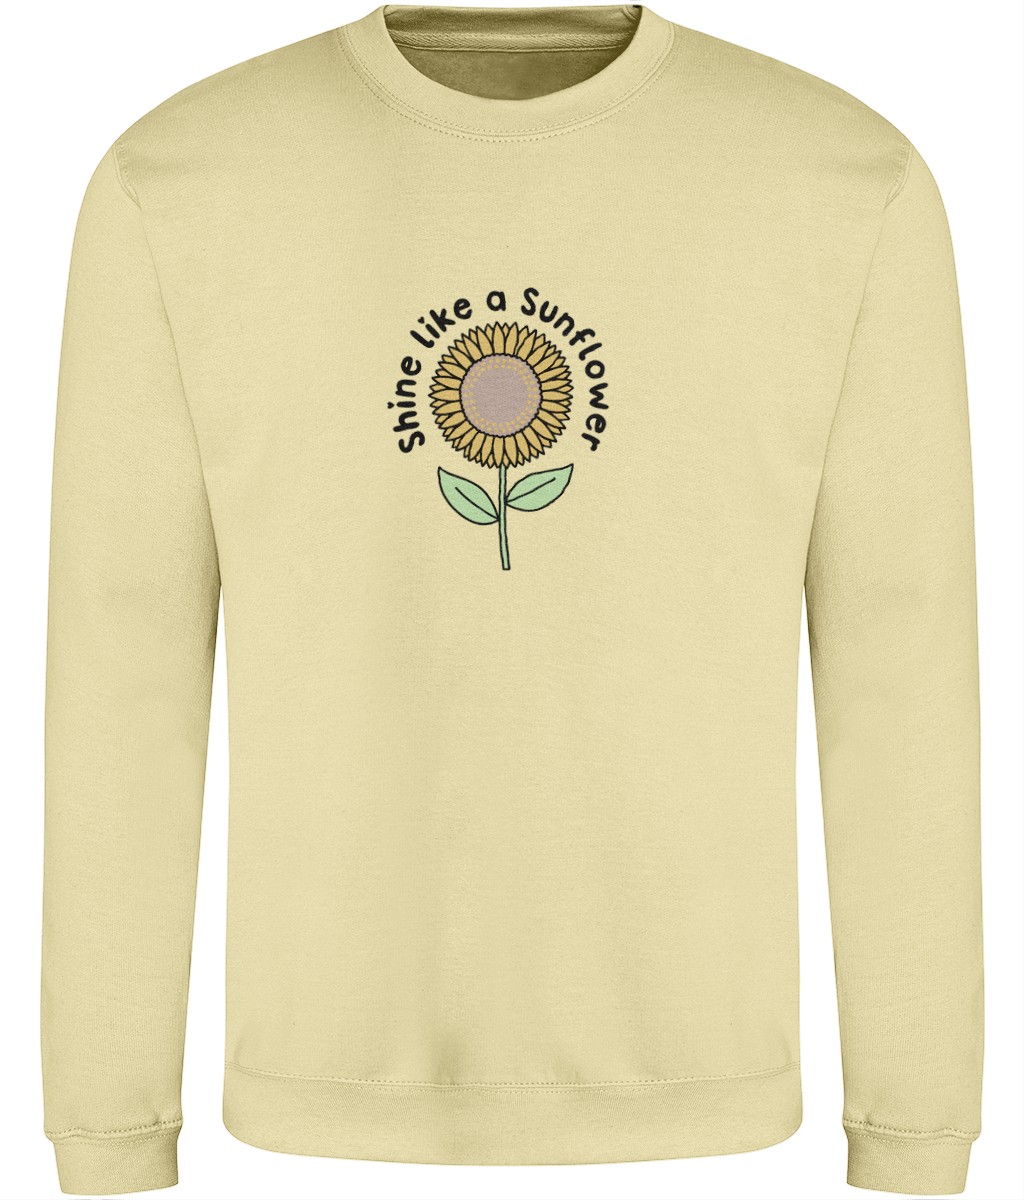 Shine Like A Sunflower - Adult Sweatshirt - Light Multi Colour Options